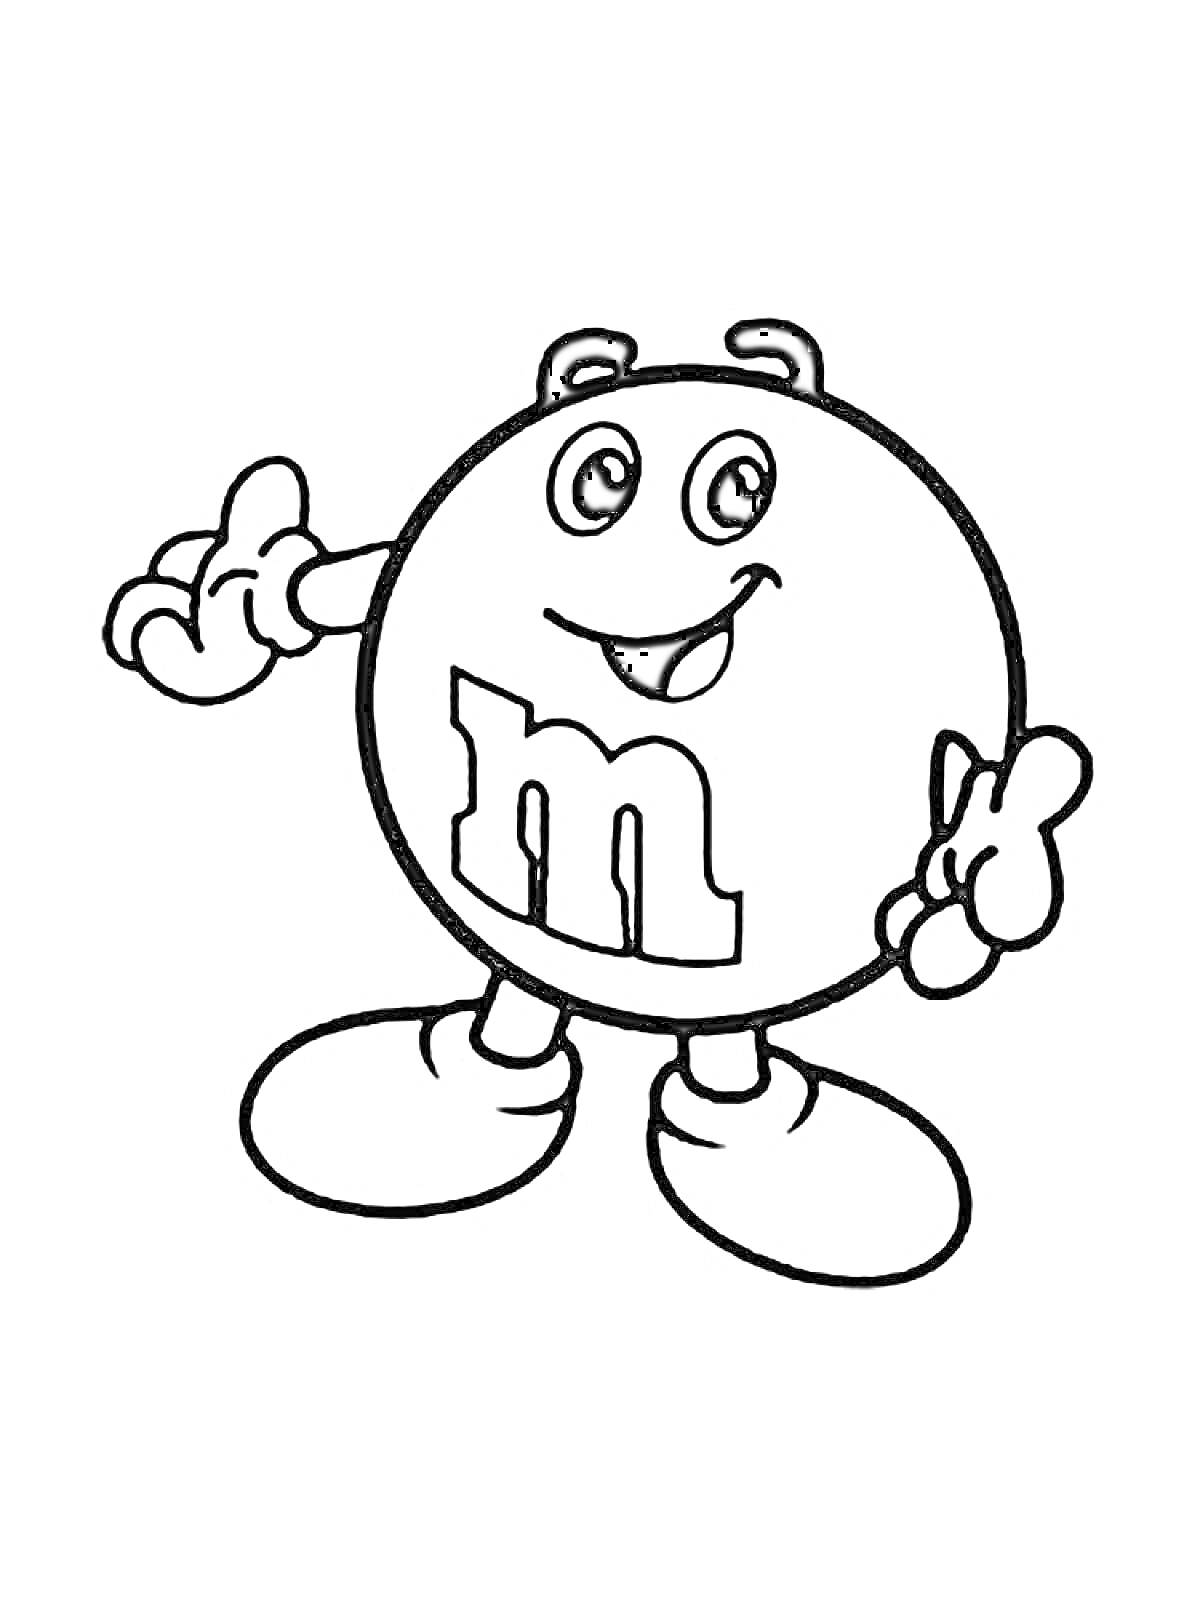 Раскраска Раскраска M&M's персонаж с поднятой рукой и поднятым пальцем